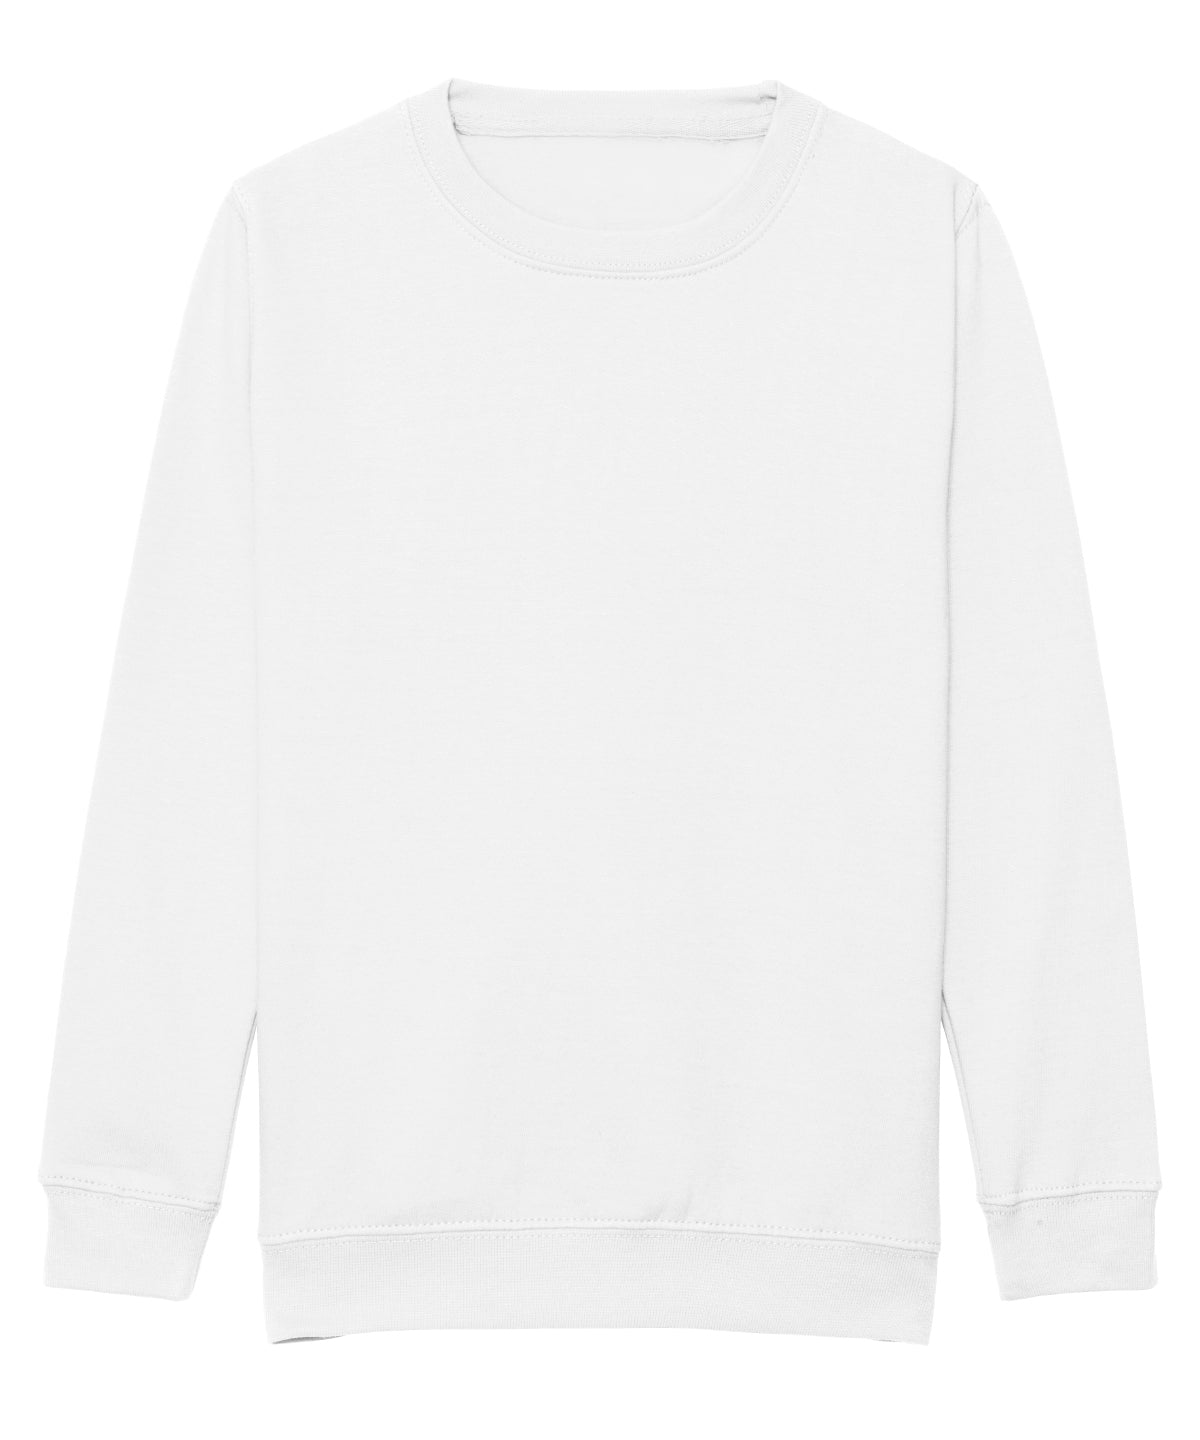 Personalised Sweatshirts - White AWDis Just Hoods Kids AWDis sweatshirt